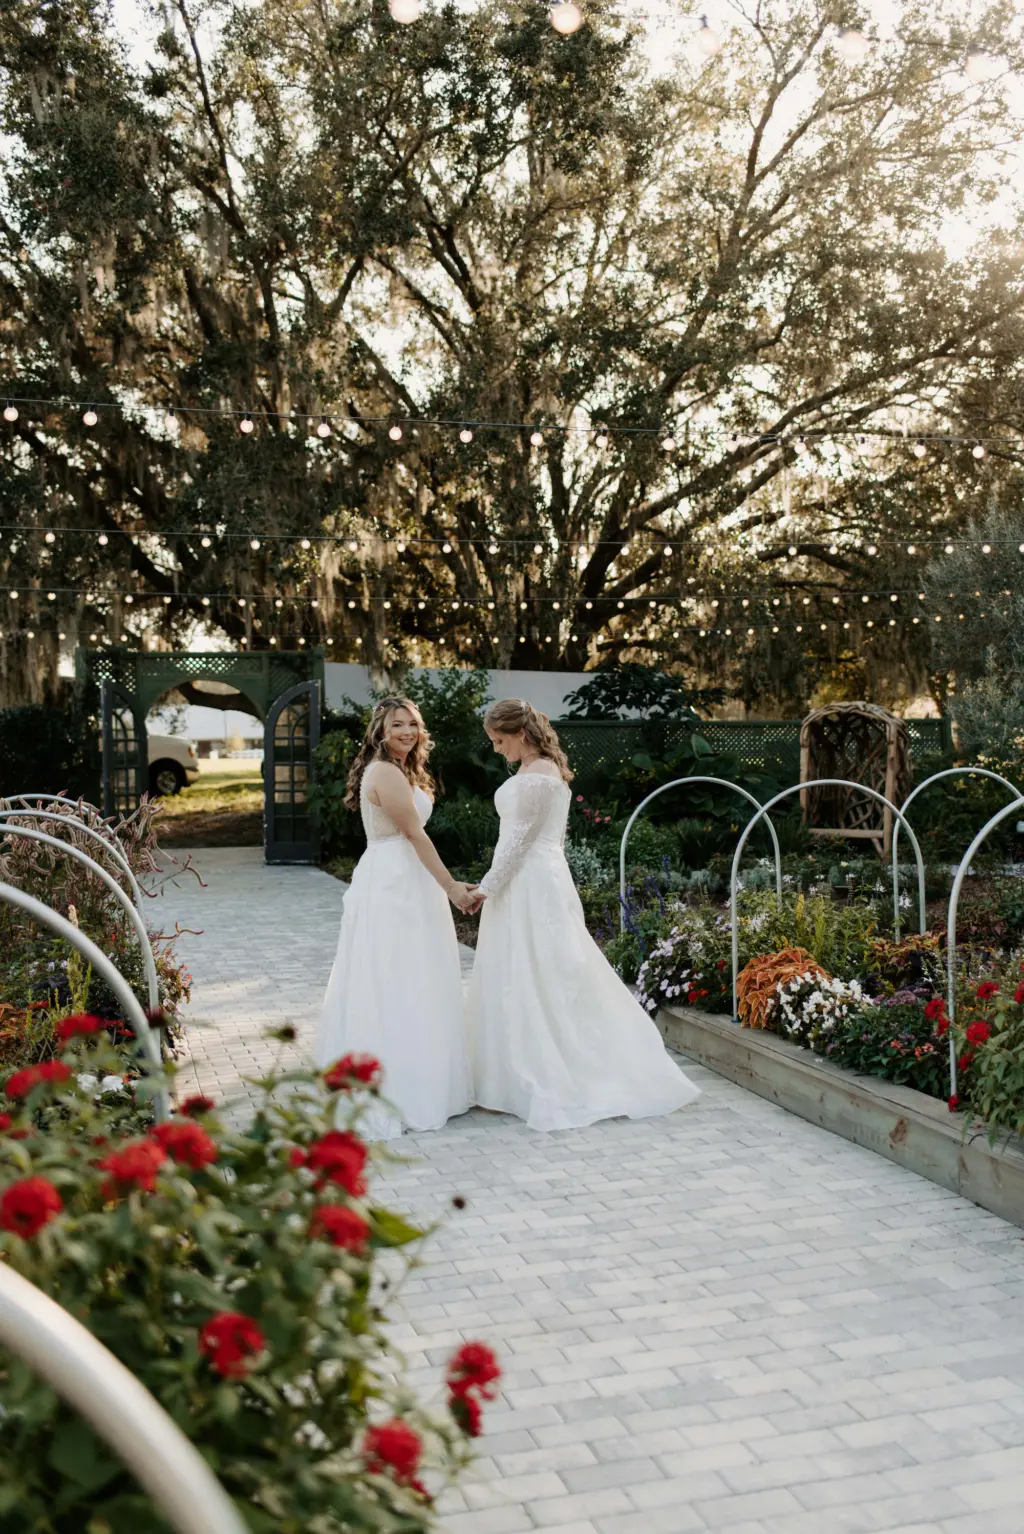 Same Sex Couple First Look Bridal Portraits at Garden Wedding Venue | Tampa Bay Wedding Venue Mill Pond Estates